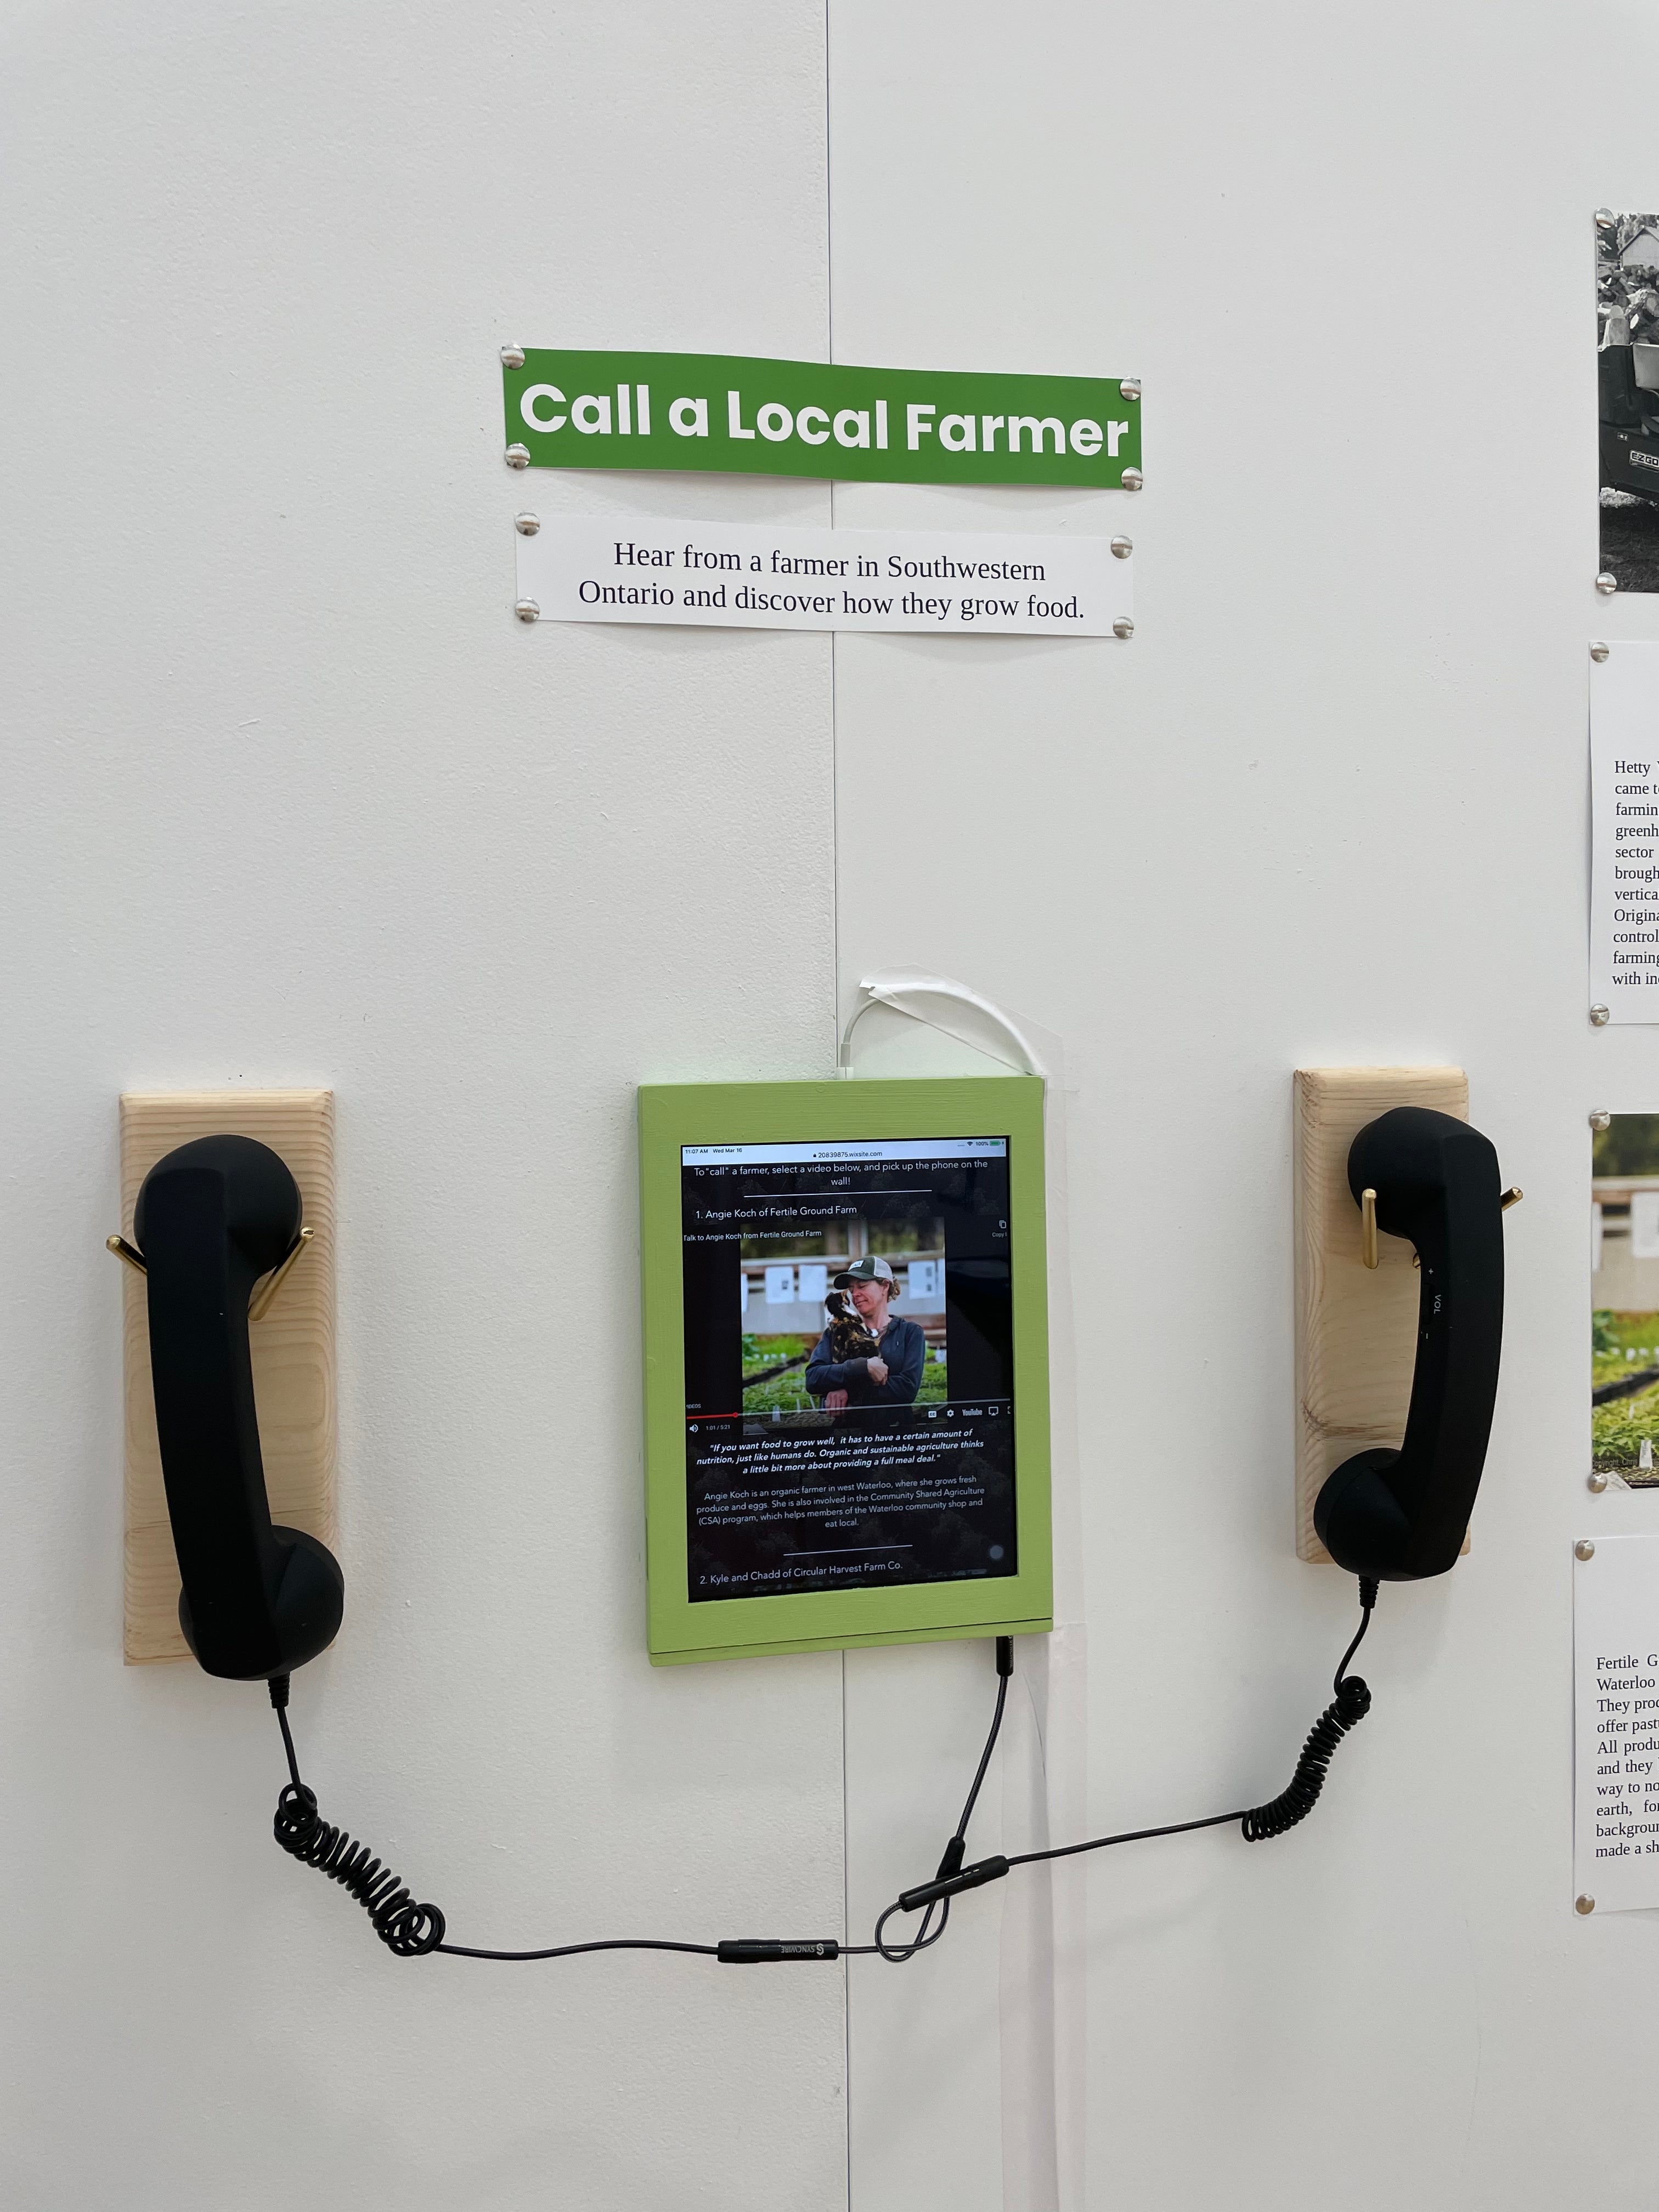 phones to call a local farmer